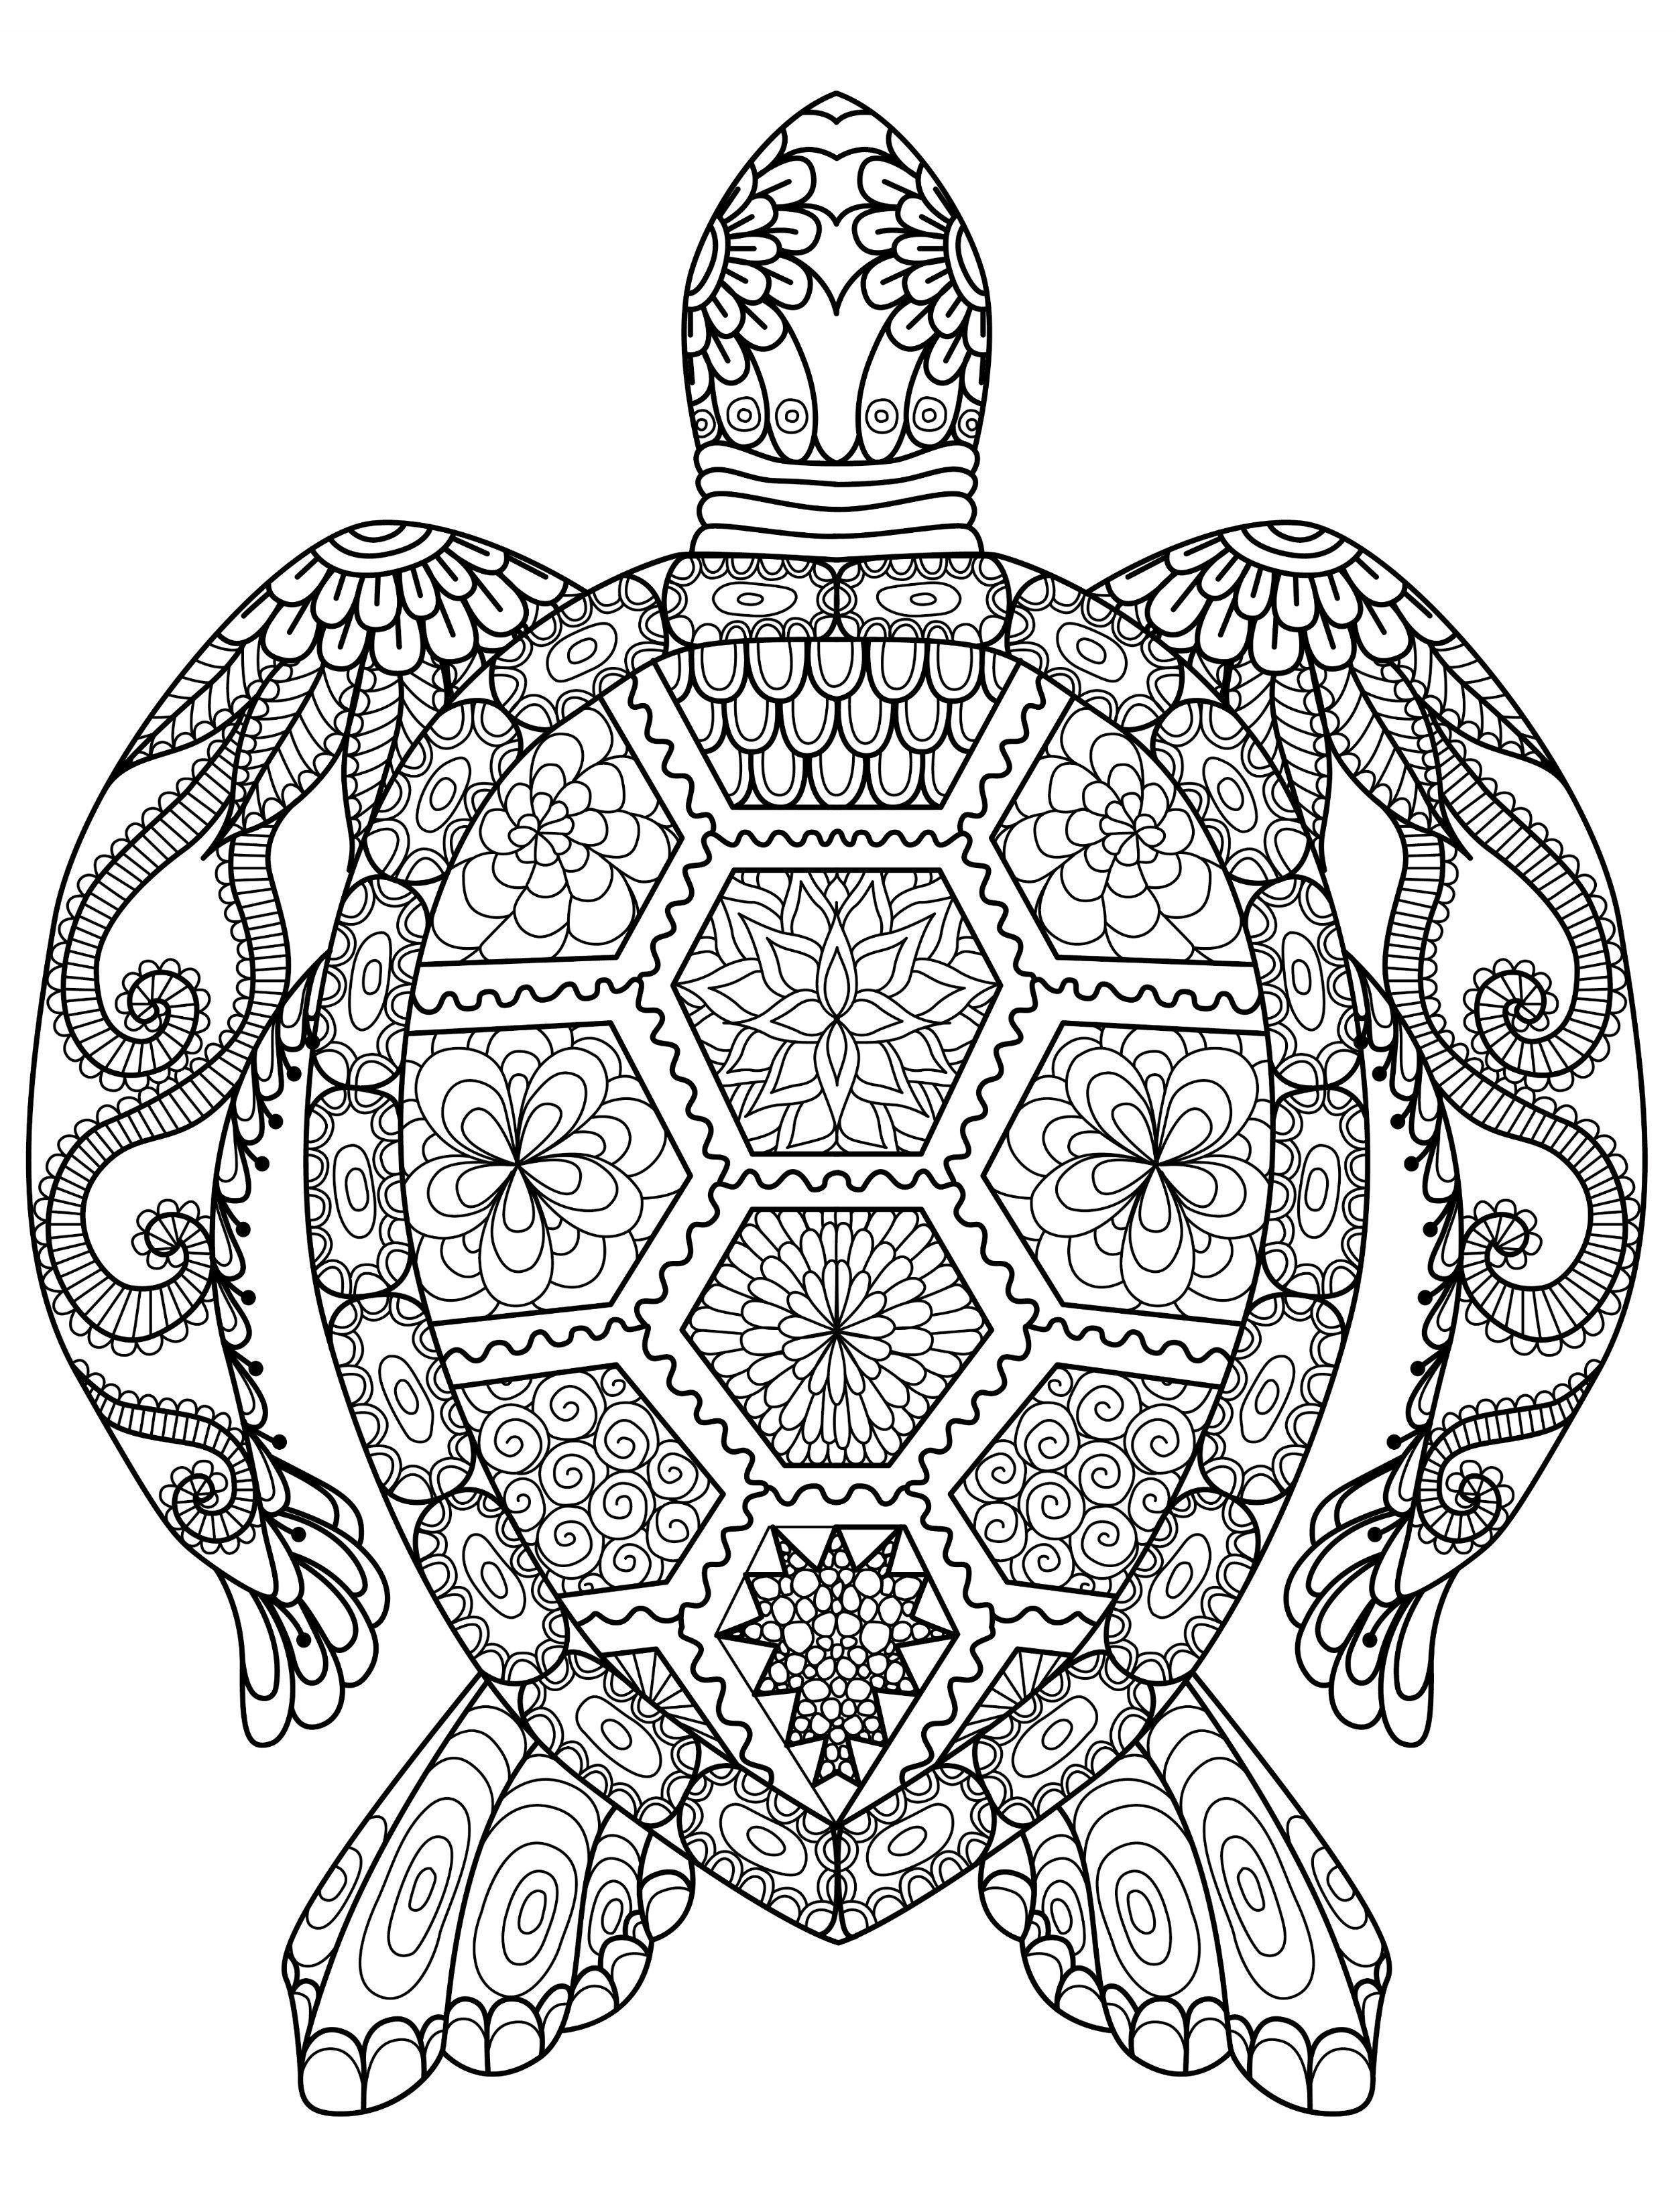 Animal Mandala Coloring Pages Pdf to Print - Animal Mandala Coloring Pages turtle